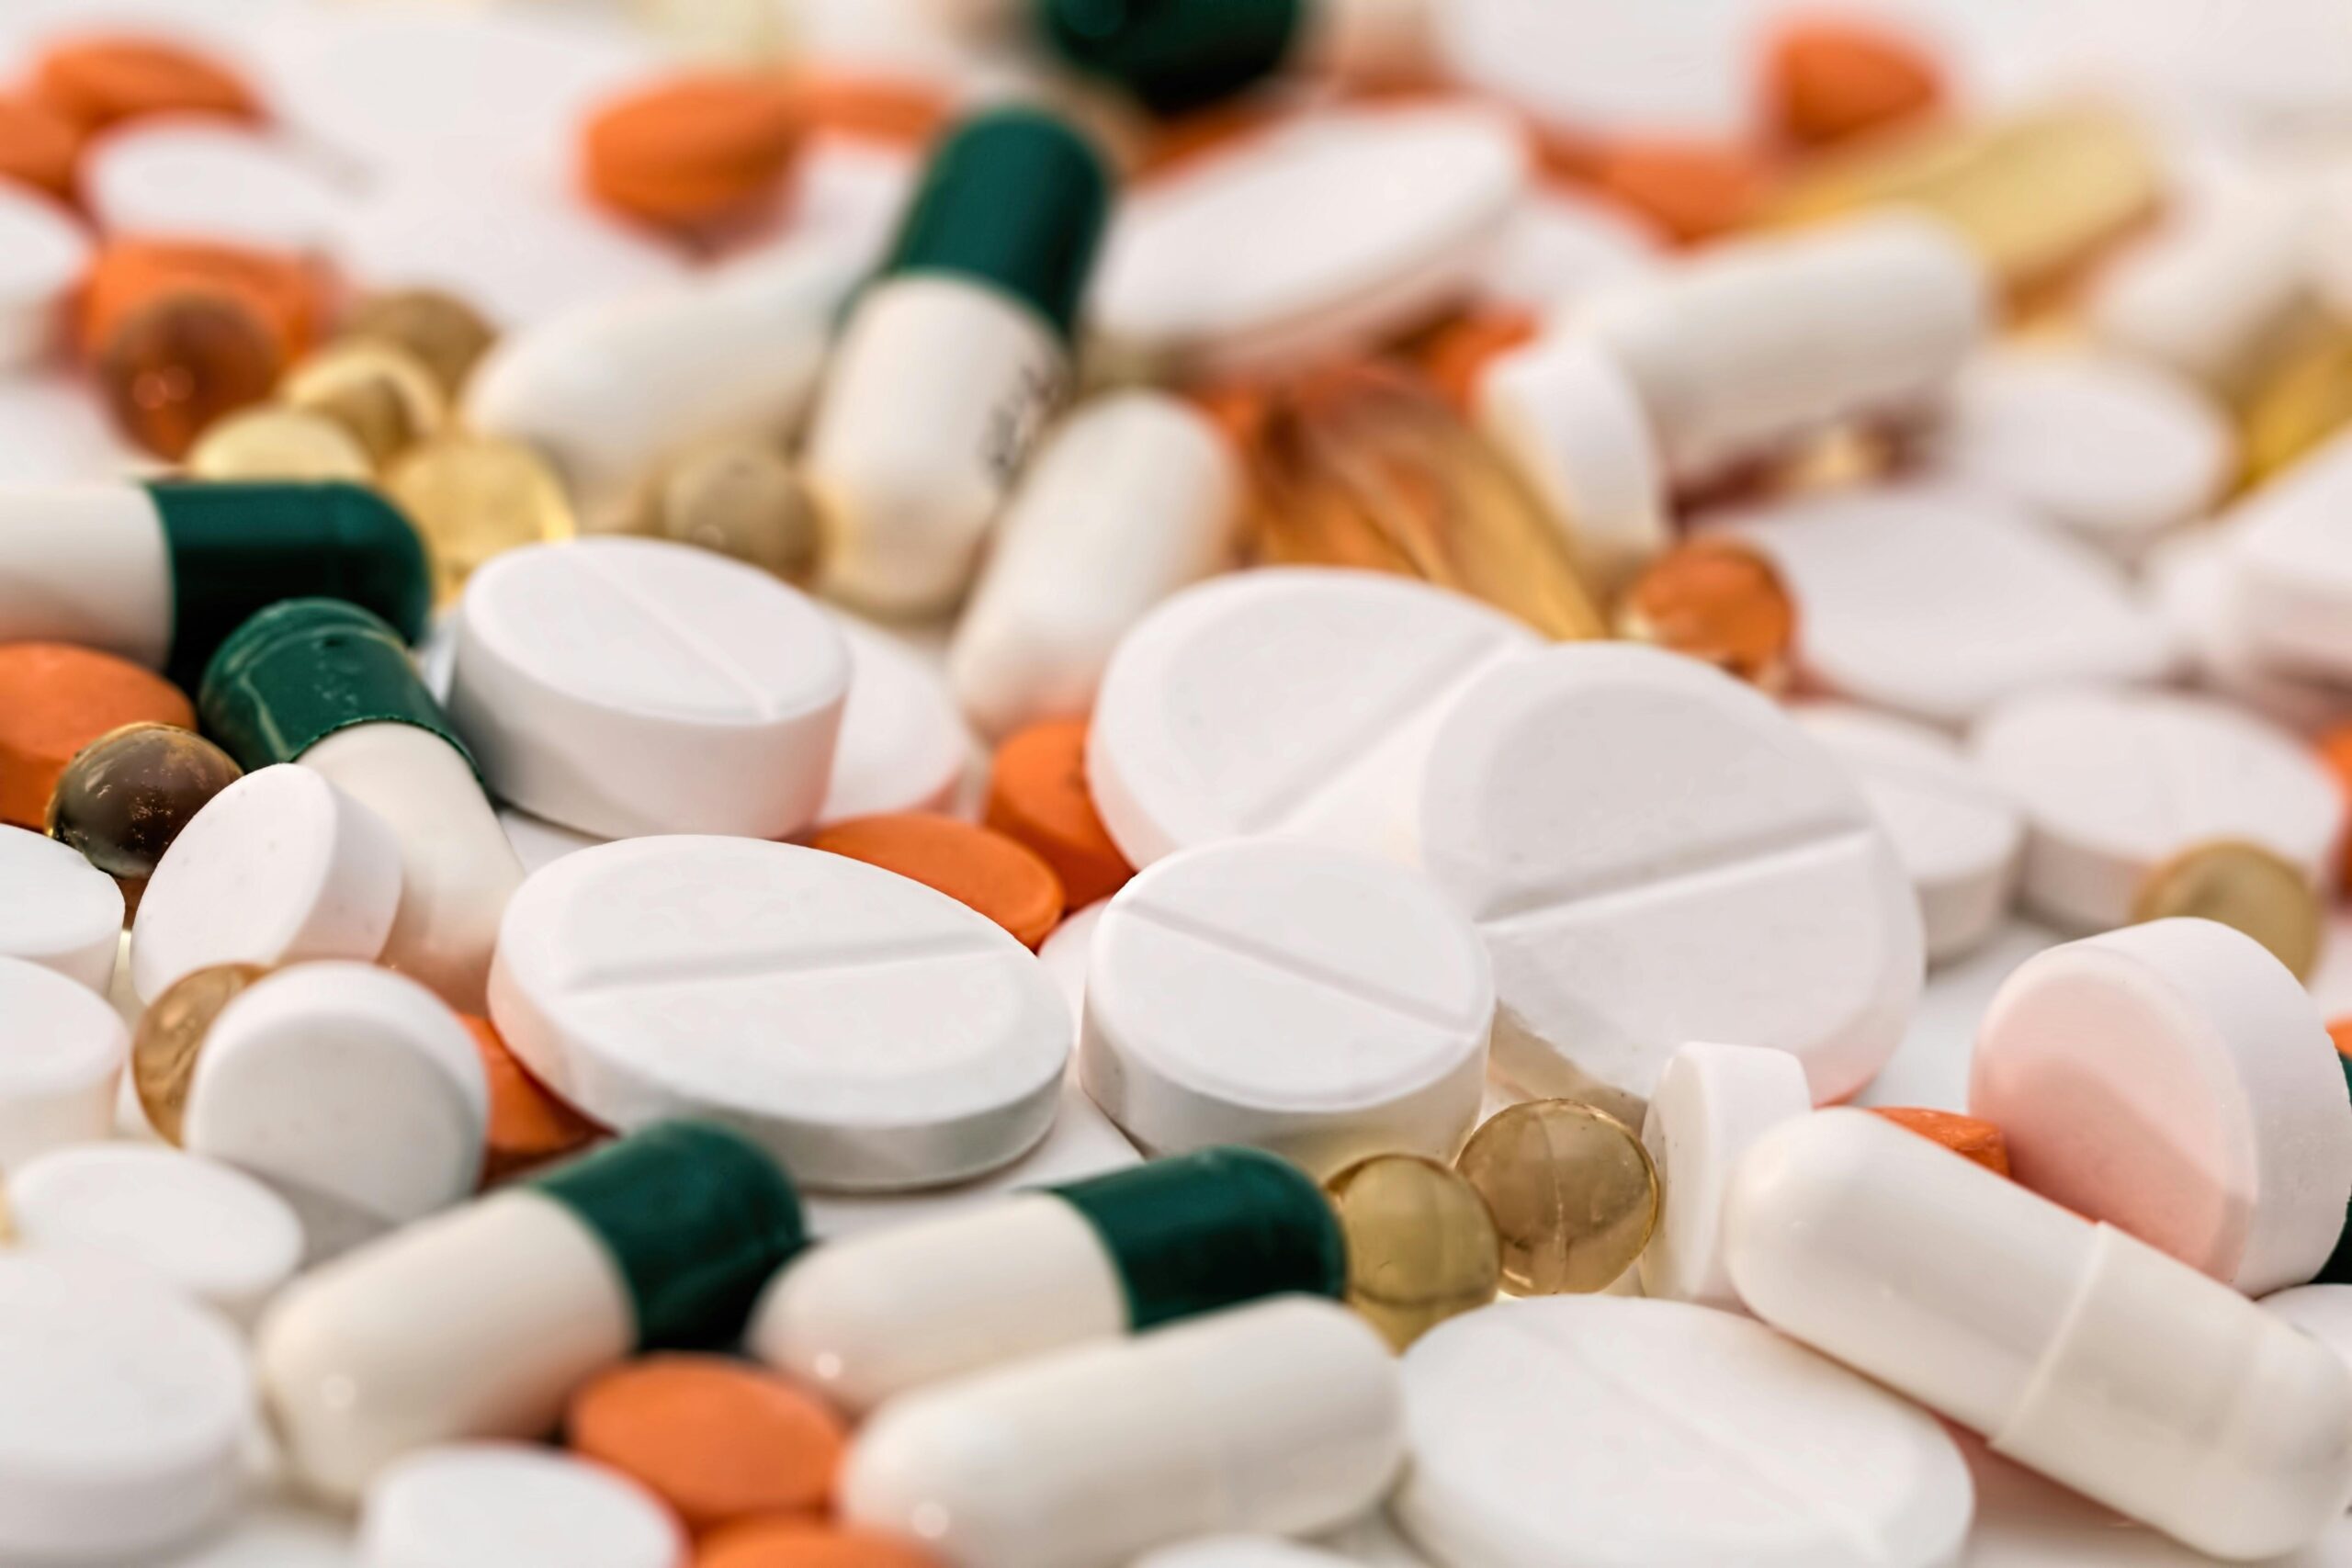 Ritalin Online with No Prescription: Navigating the Risks and Rewards